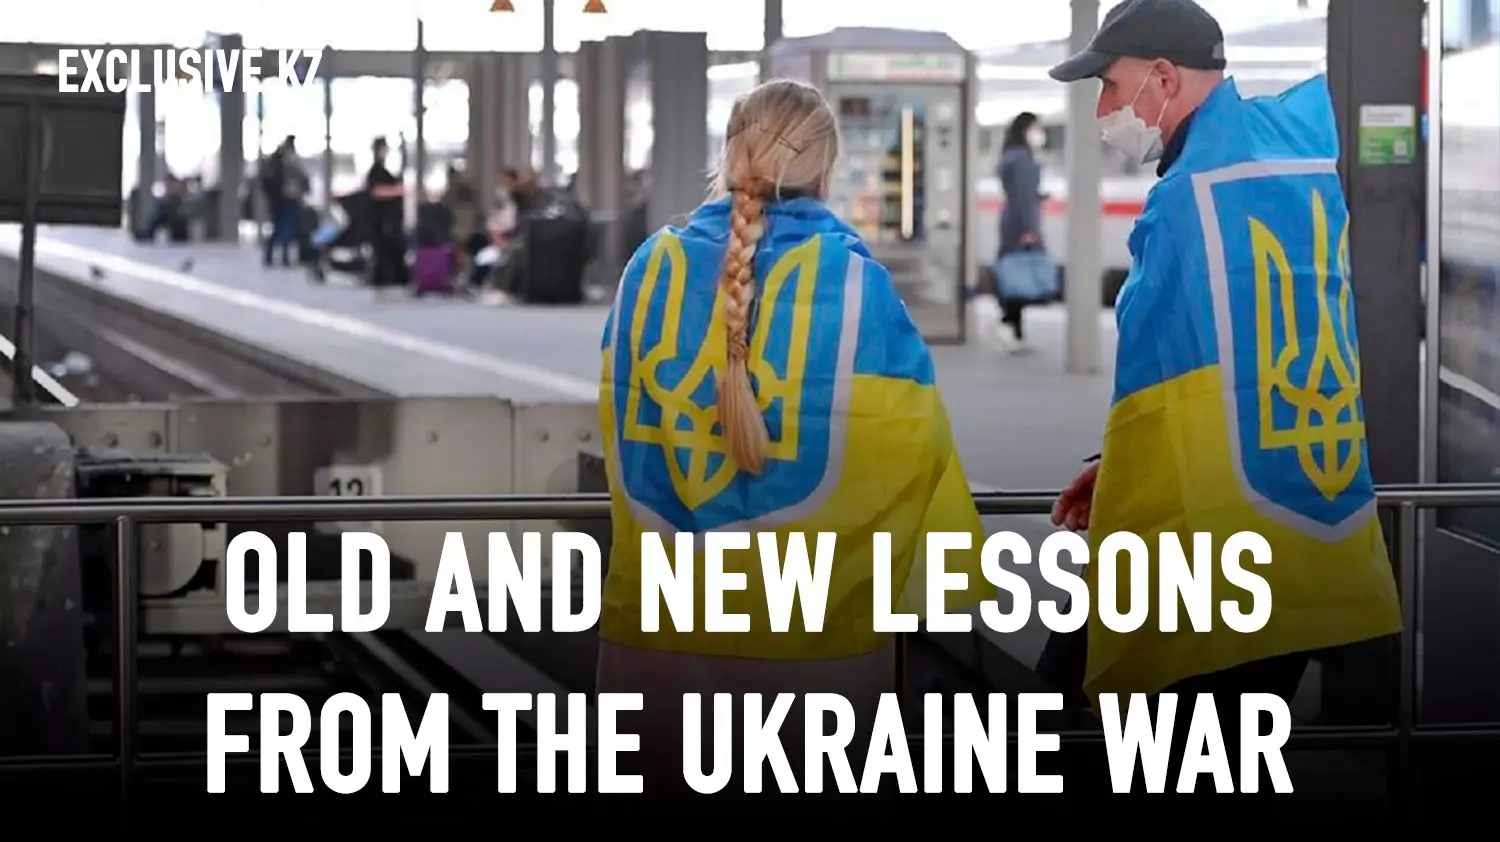 Putin’s behavior has strengthened Ukrainian national identity